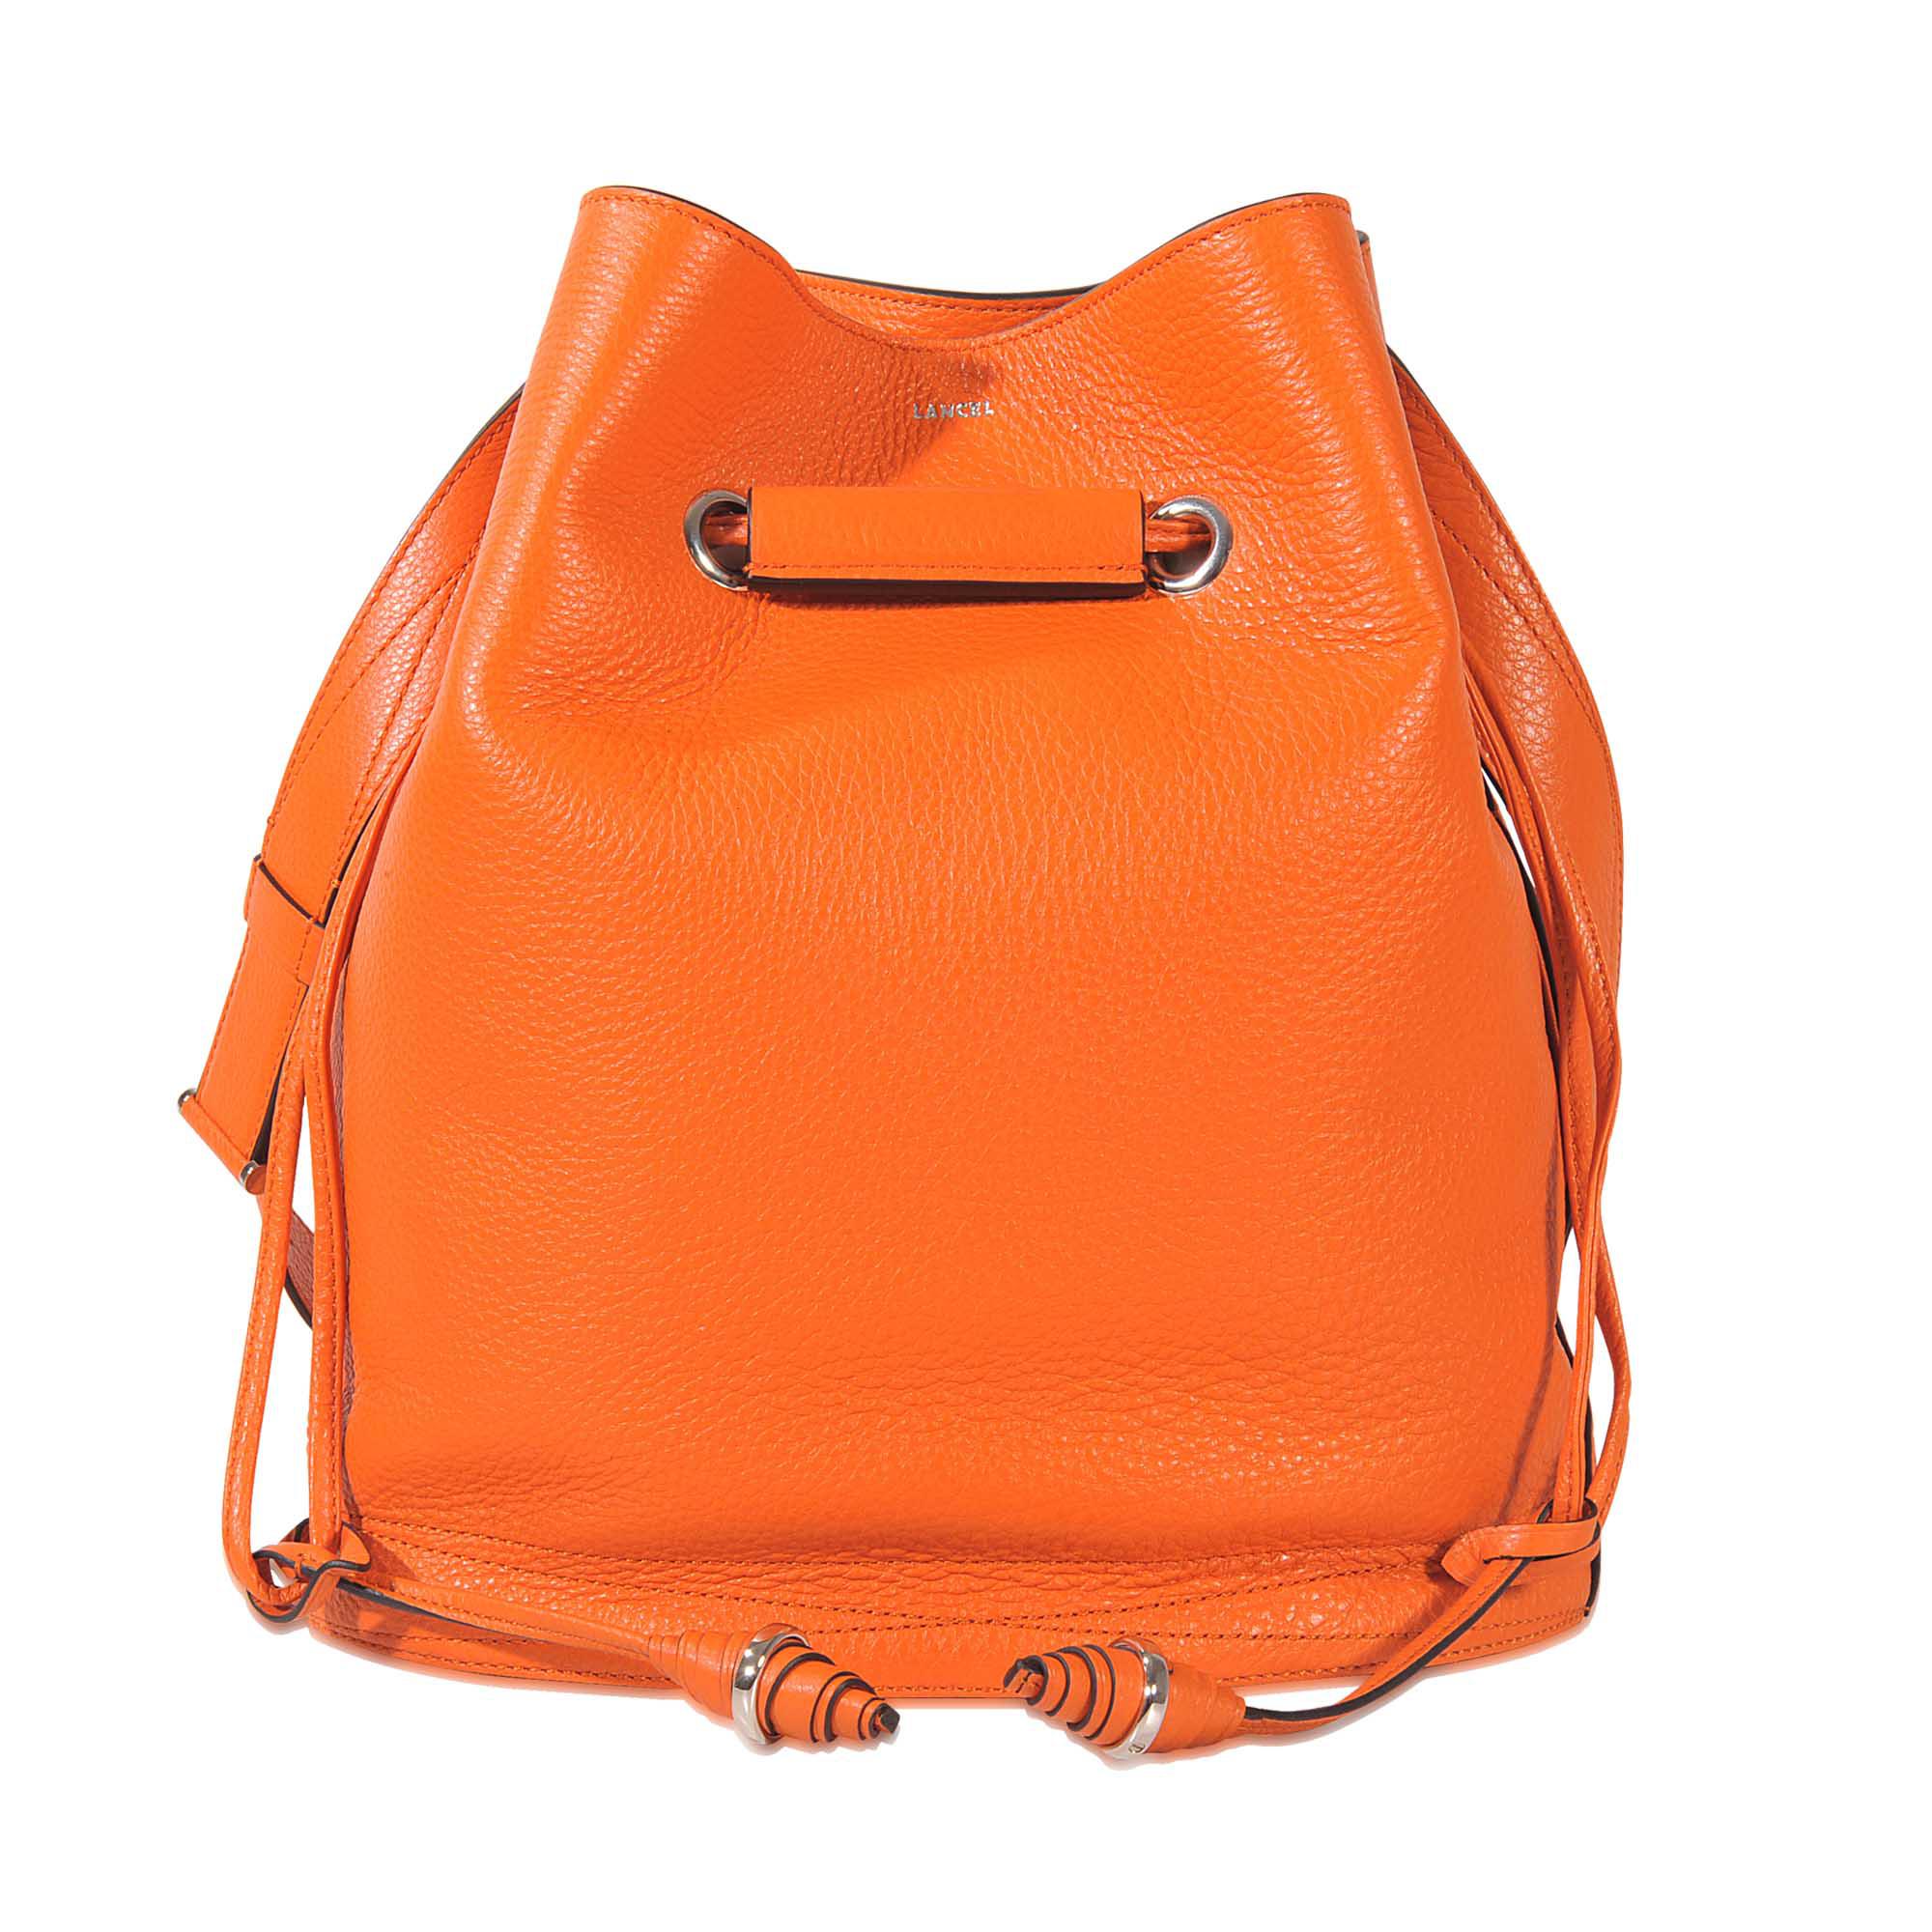 Lancel Leather Le Huit S Bucket Bag in Orange - Lyst